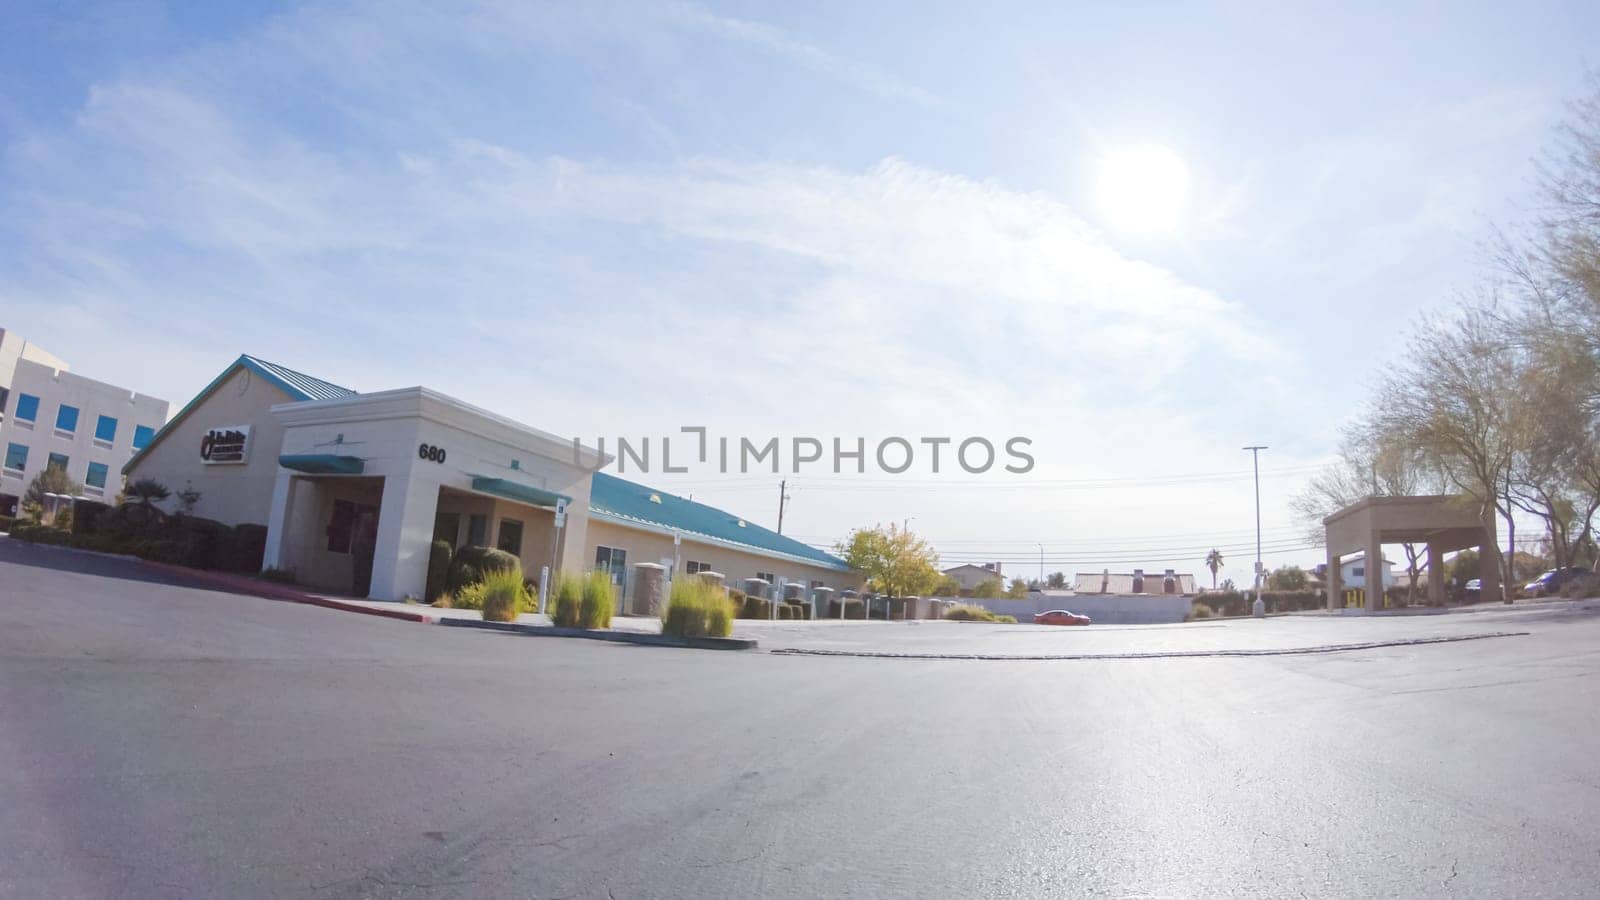 Daytime Drive: Las Vegas Residential Neighborhood Exploration by arinahabich